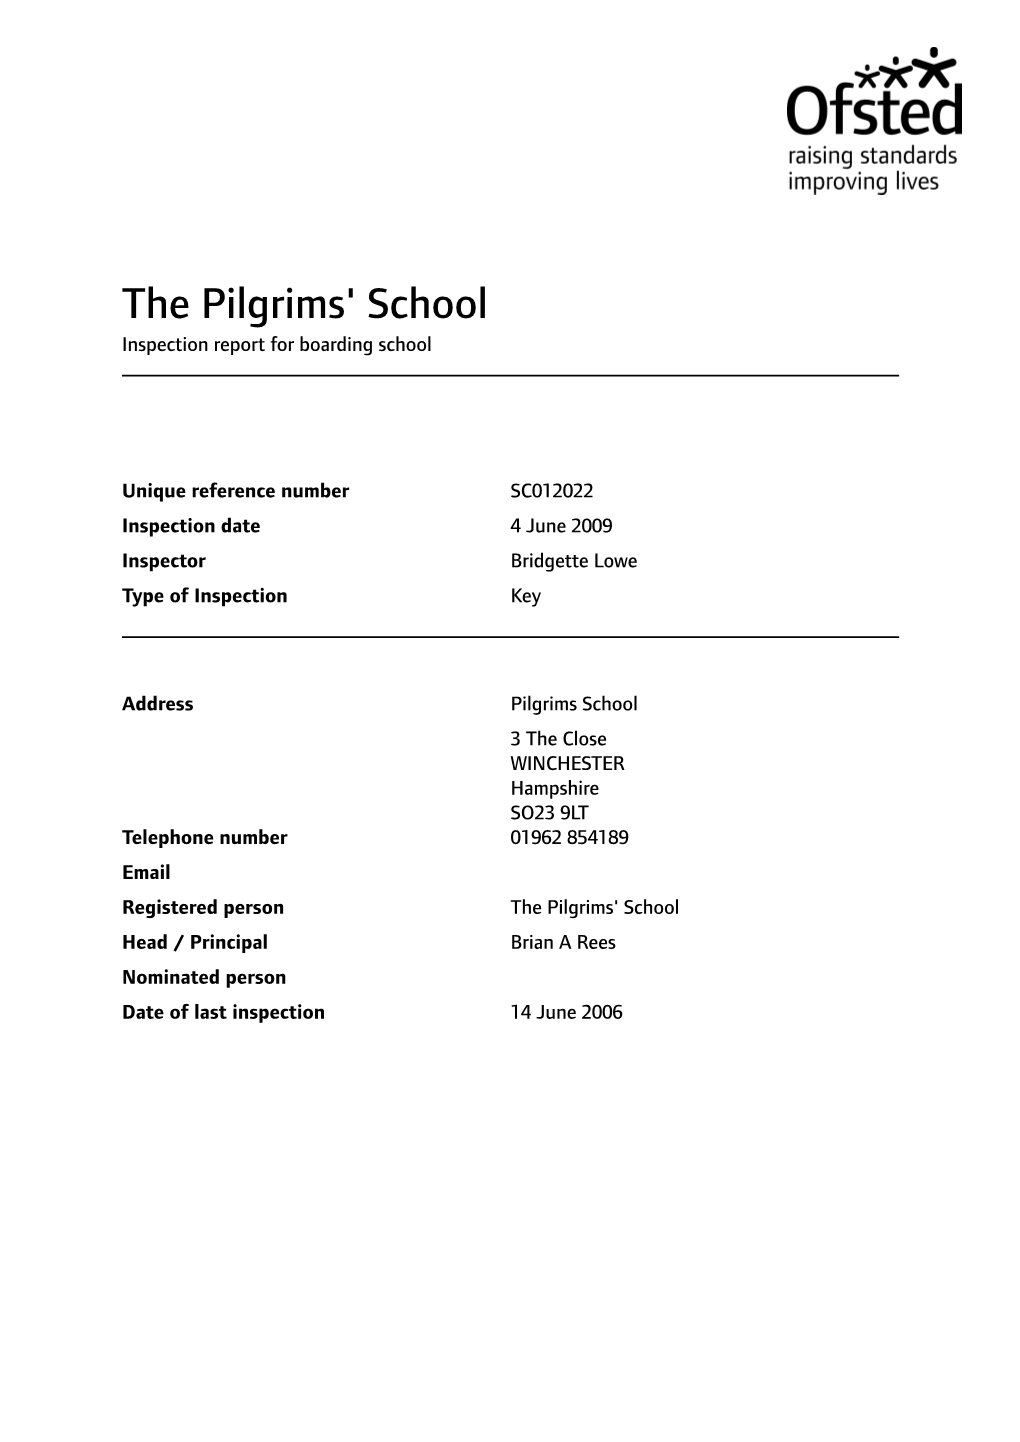 The Pilgrims' School Inspection Report for Boarding School